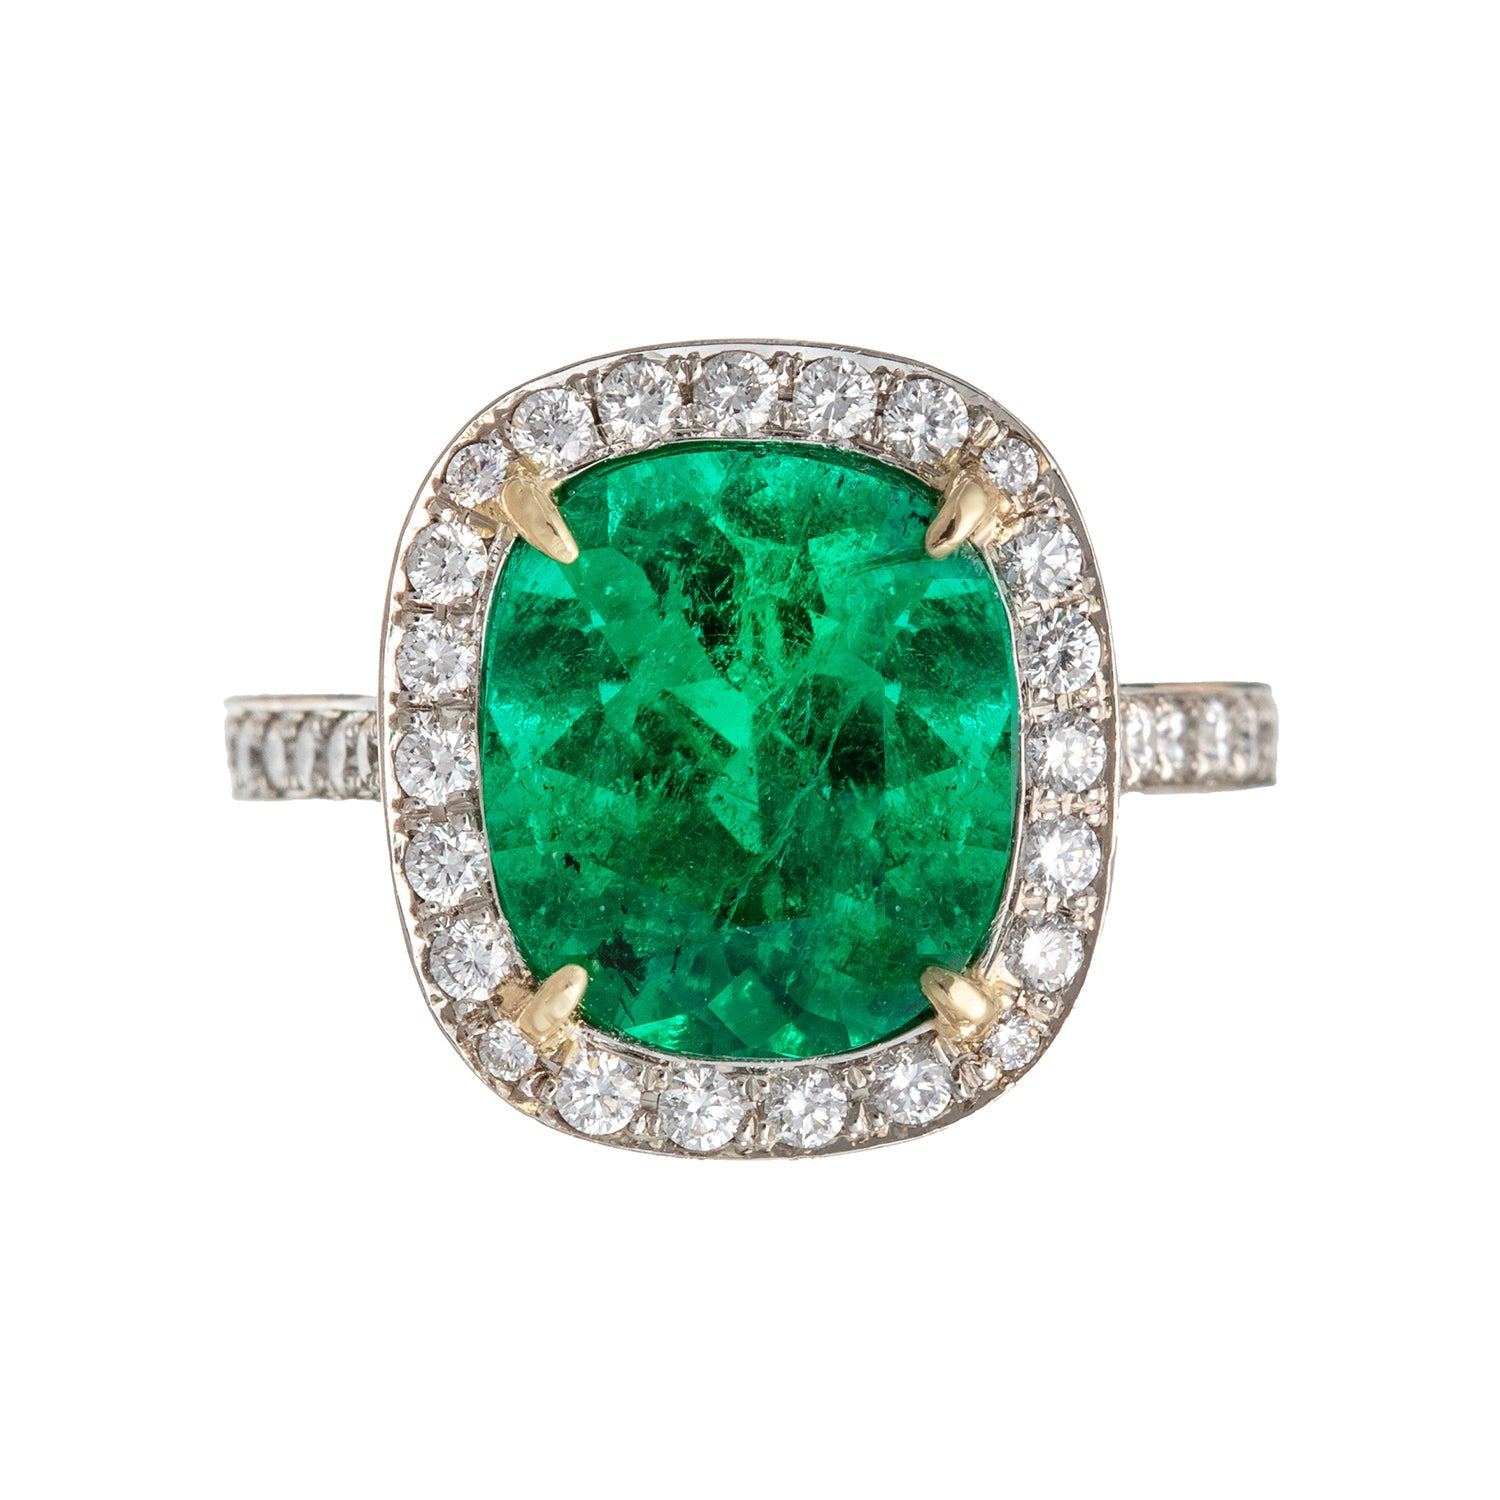 Shreve, Crump & Low - 3.94ct Colombian Emerald Diamond Ring